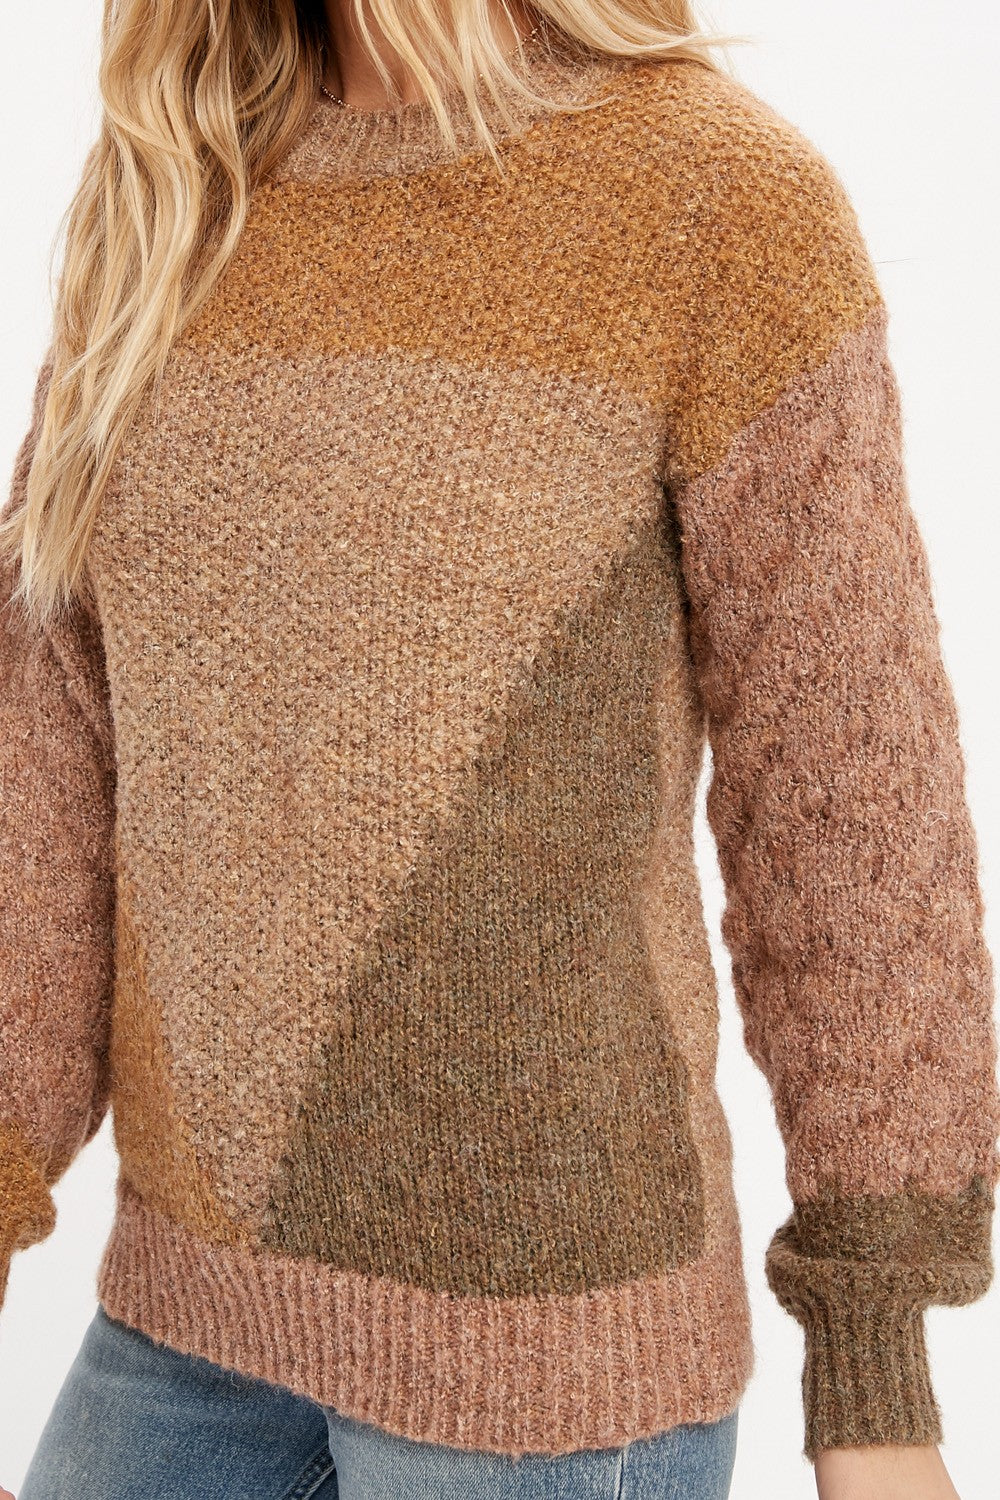 Jamie Mae Sweater